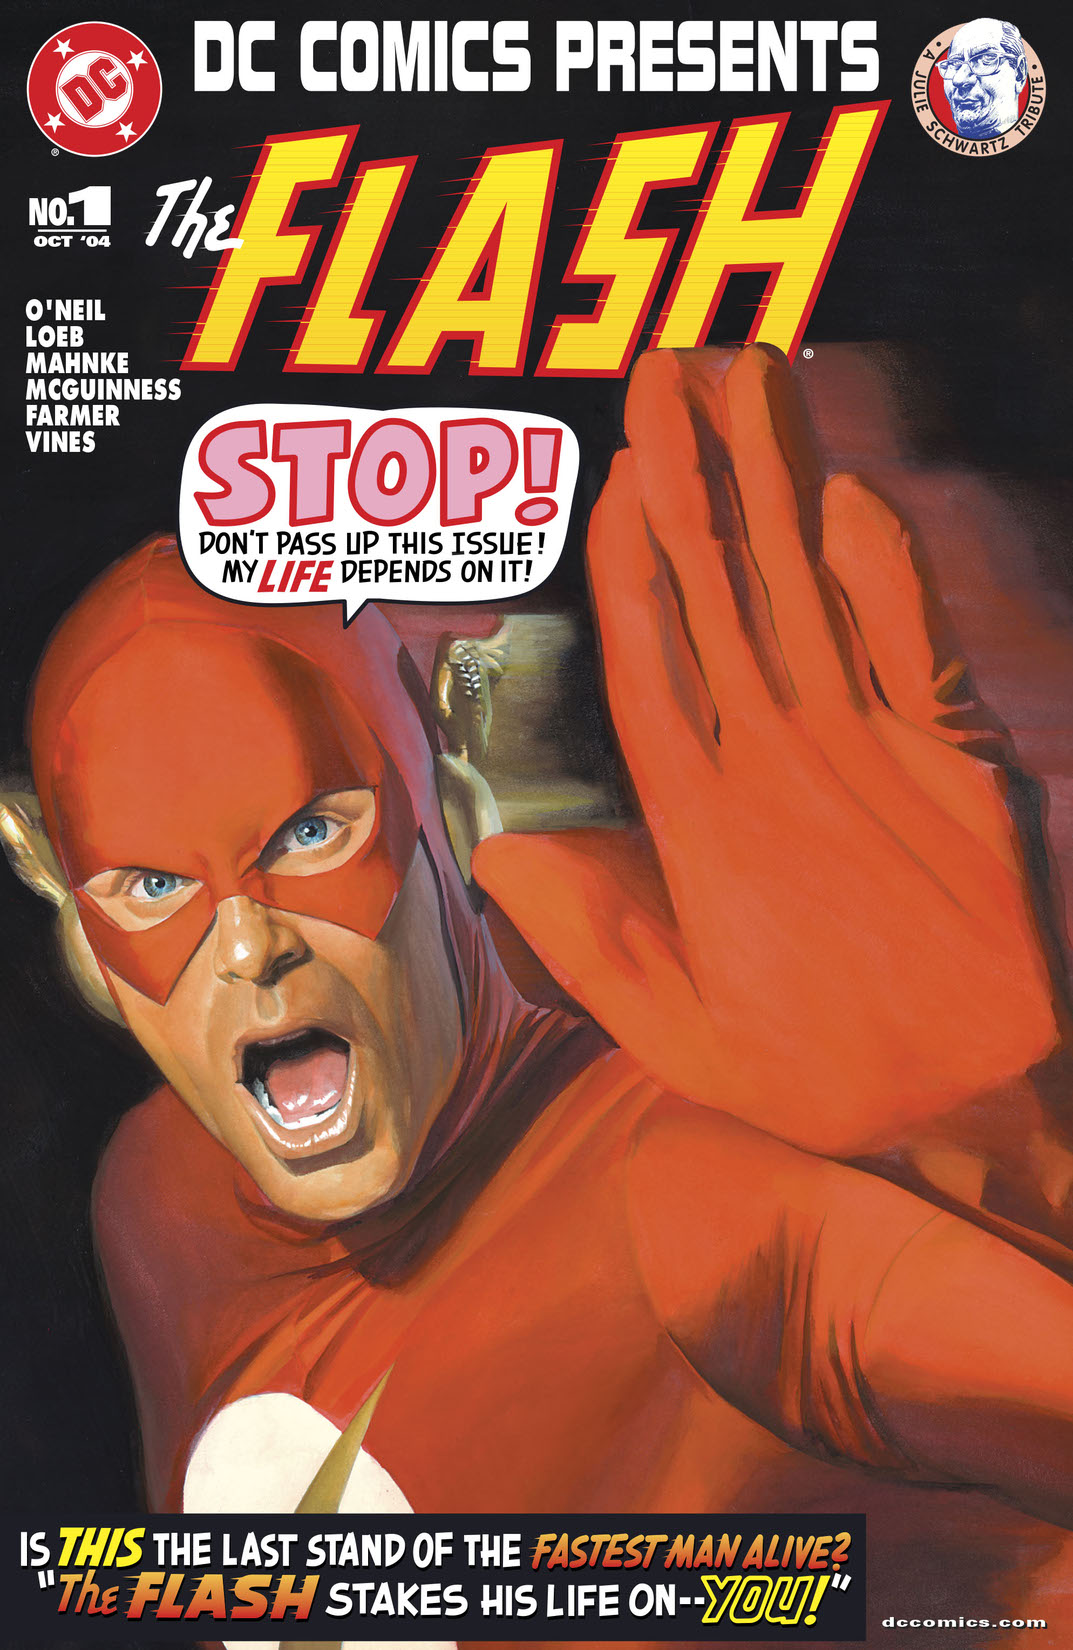 DC Comics Presents Flash (2004-) #1 preview images